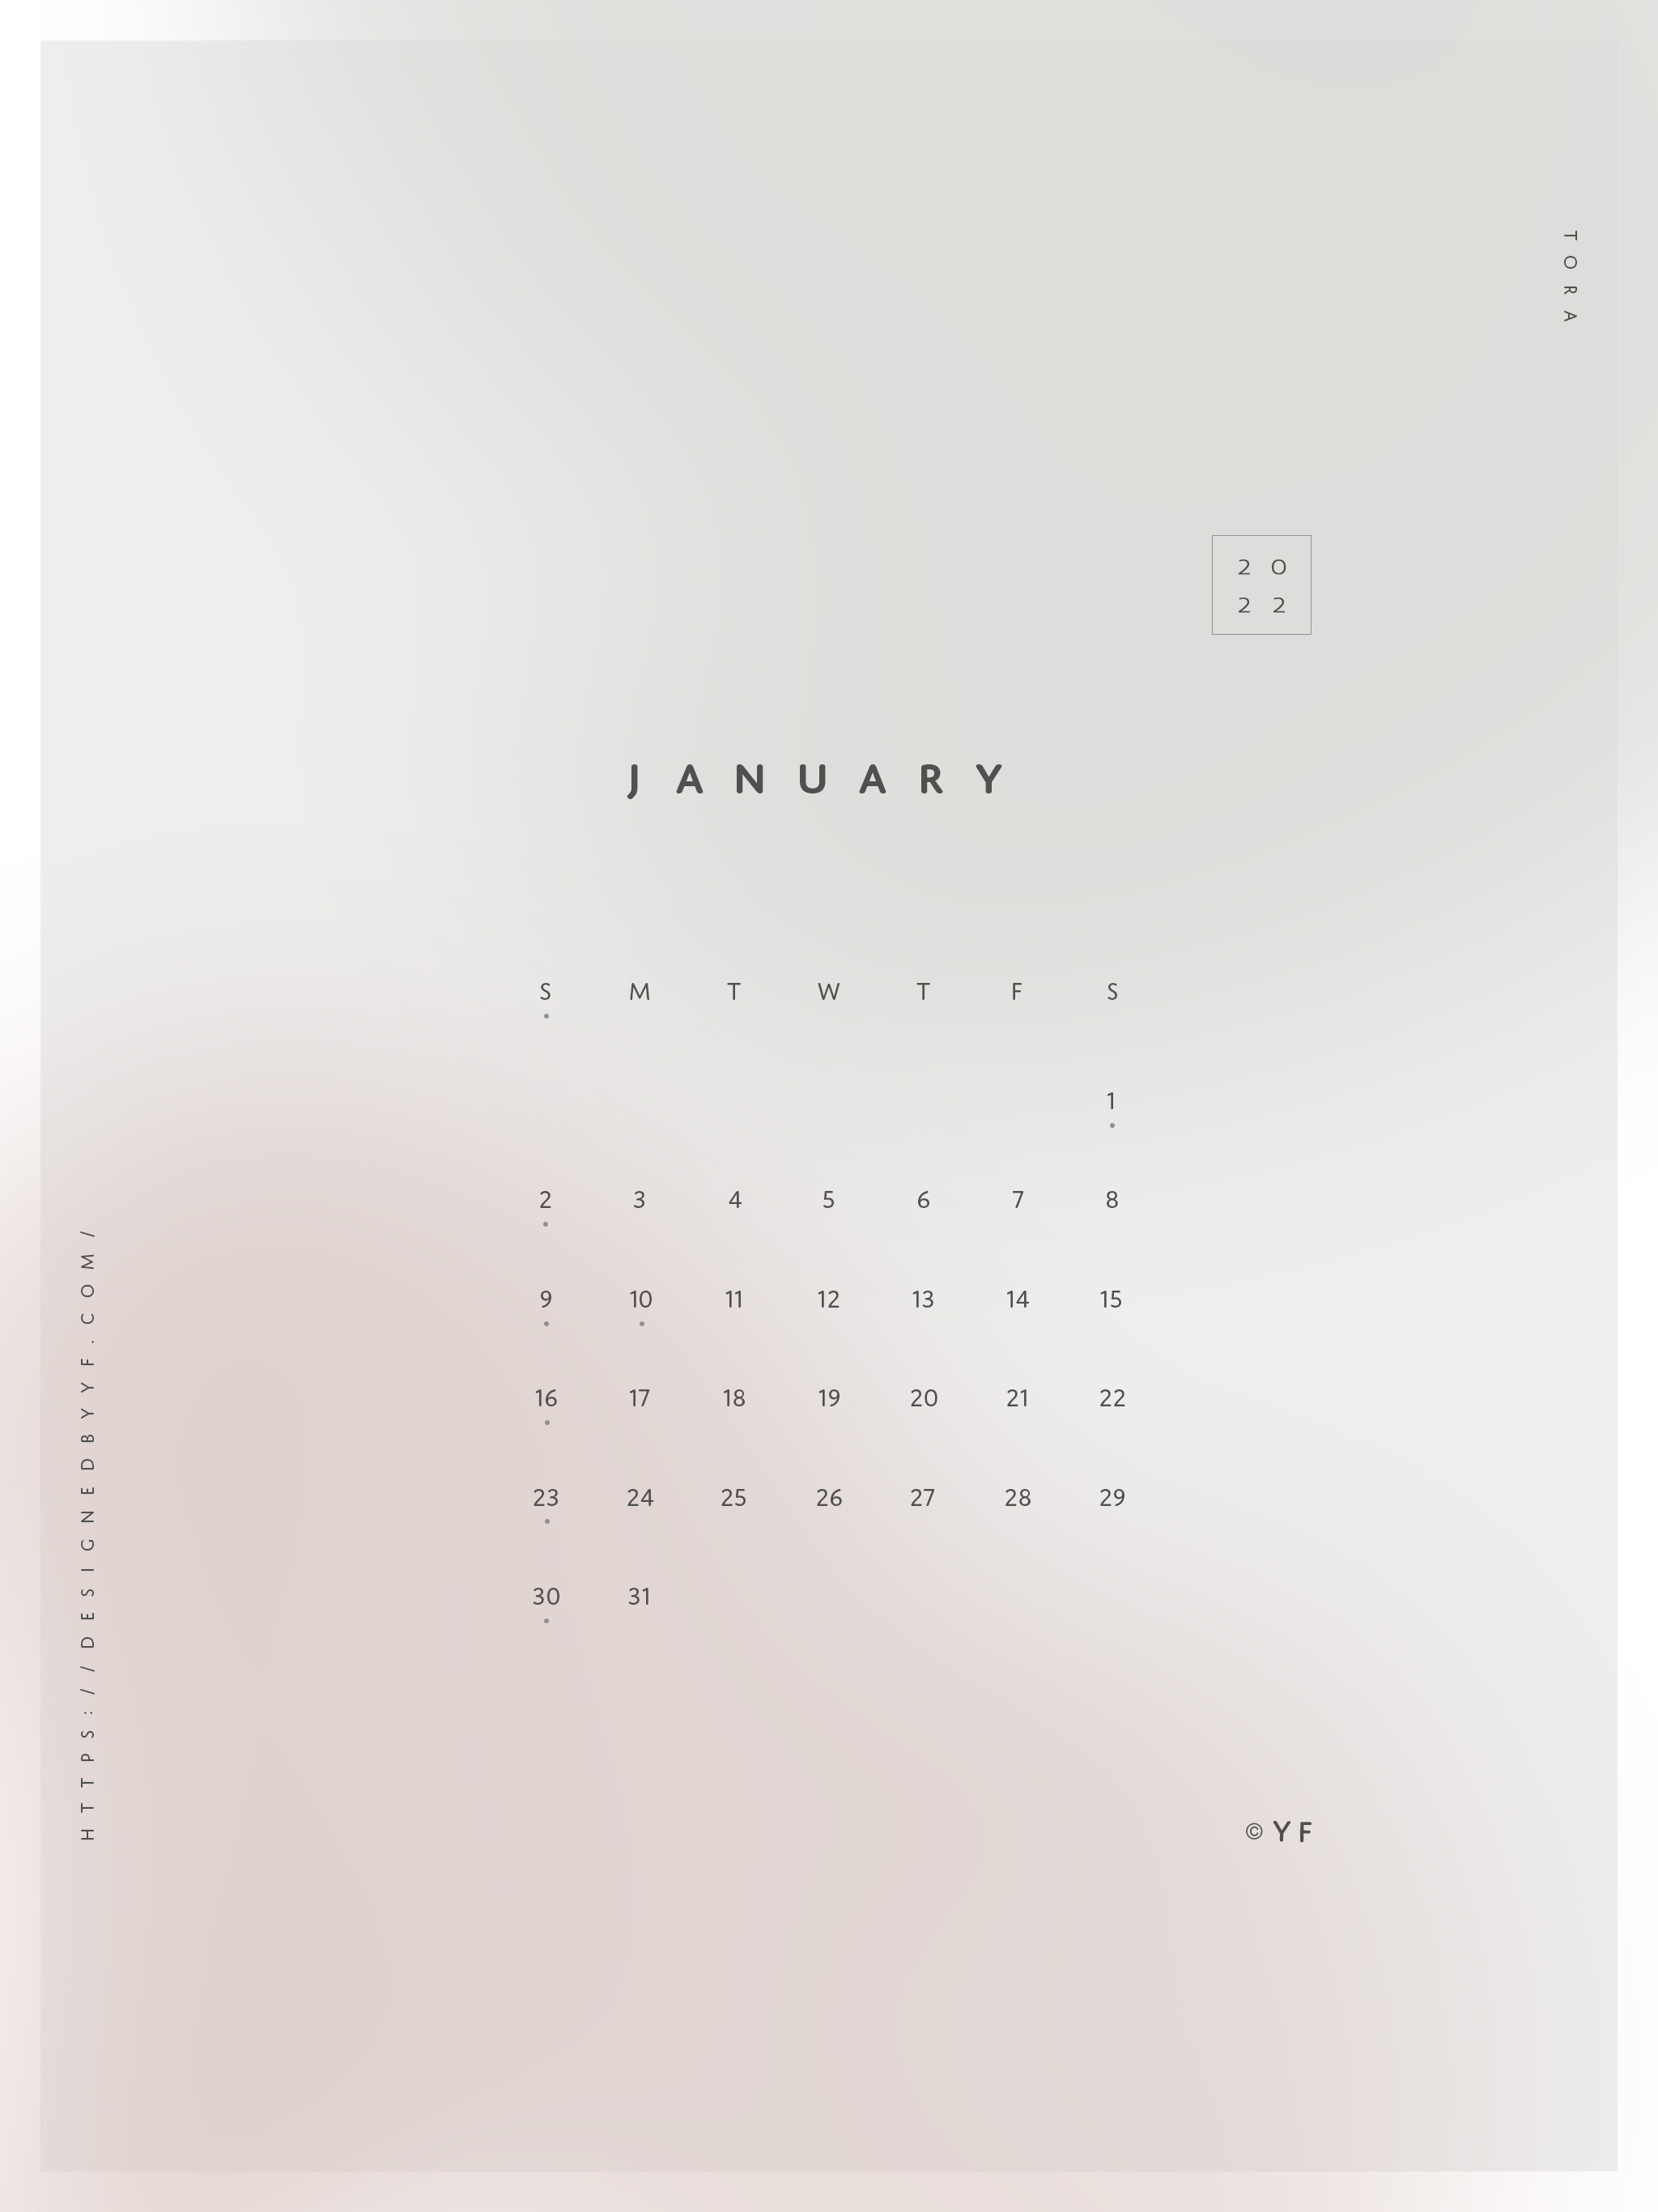 January 22 Calendar Wallpaper For The Ipad Design By Yf